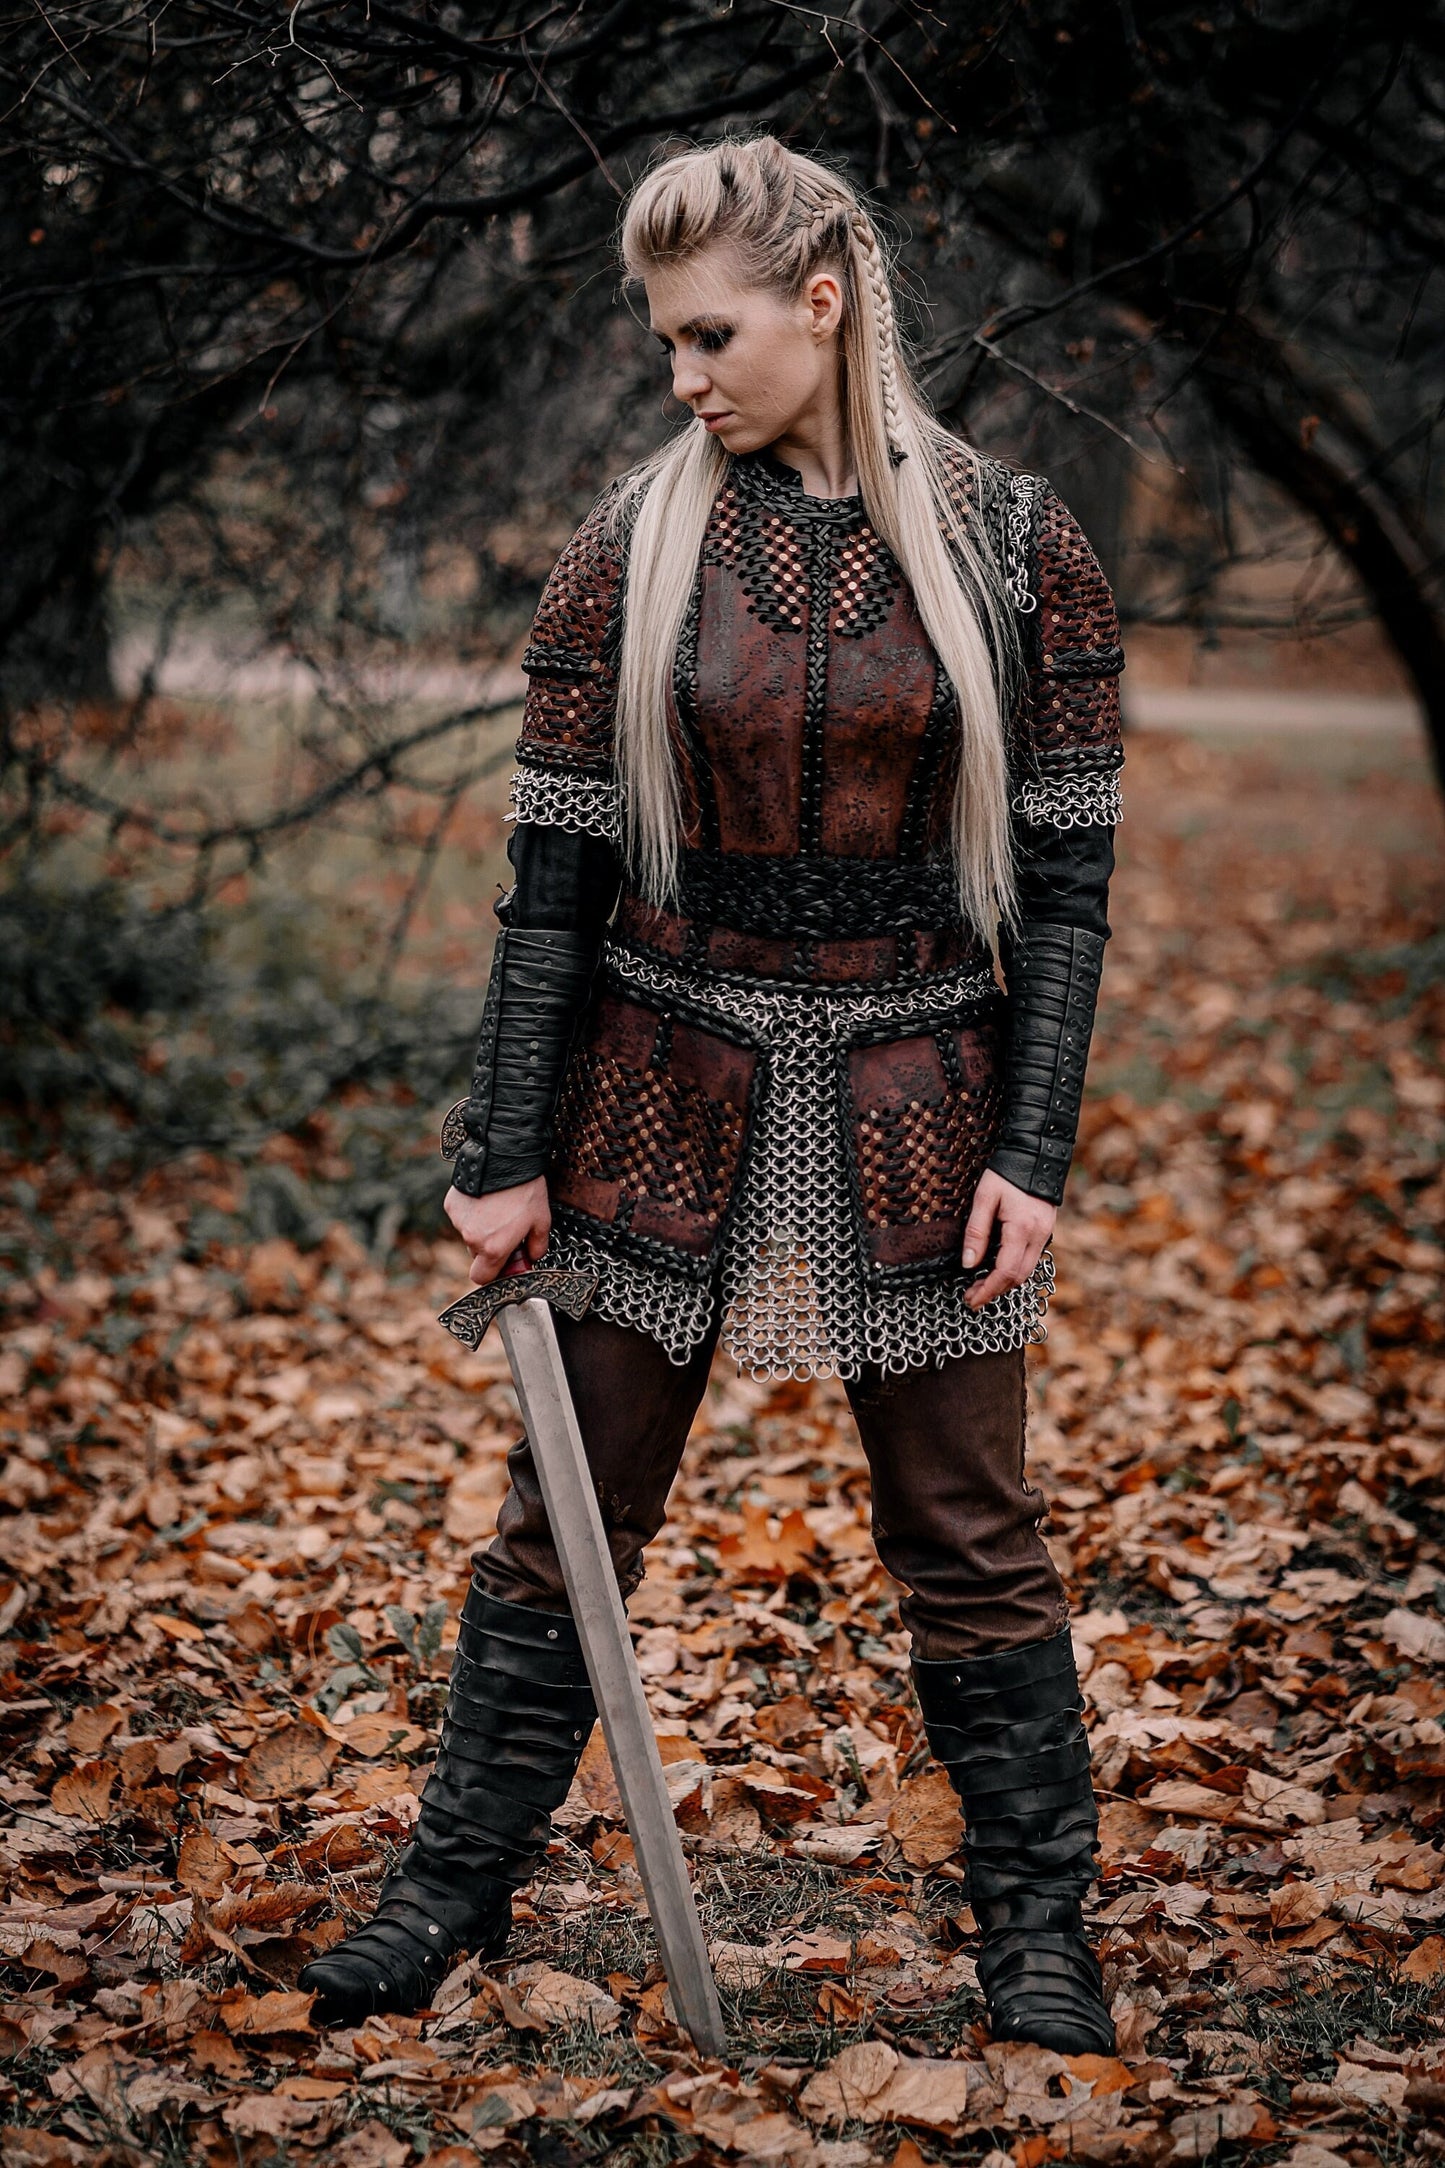 viking berserker armor